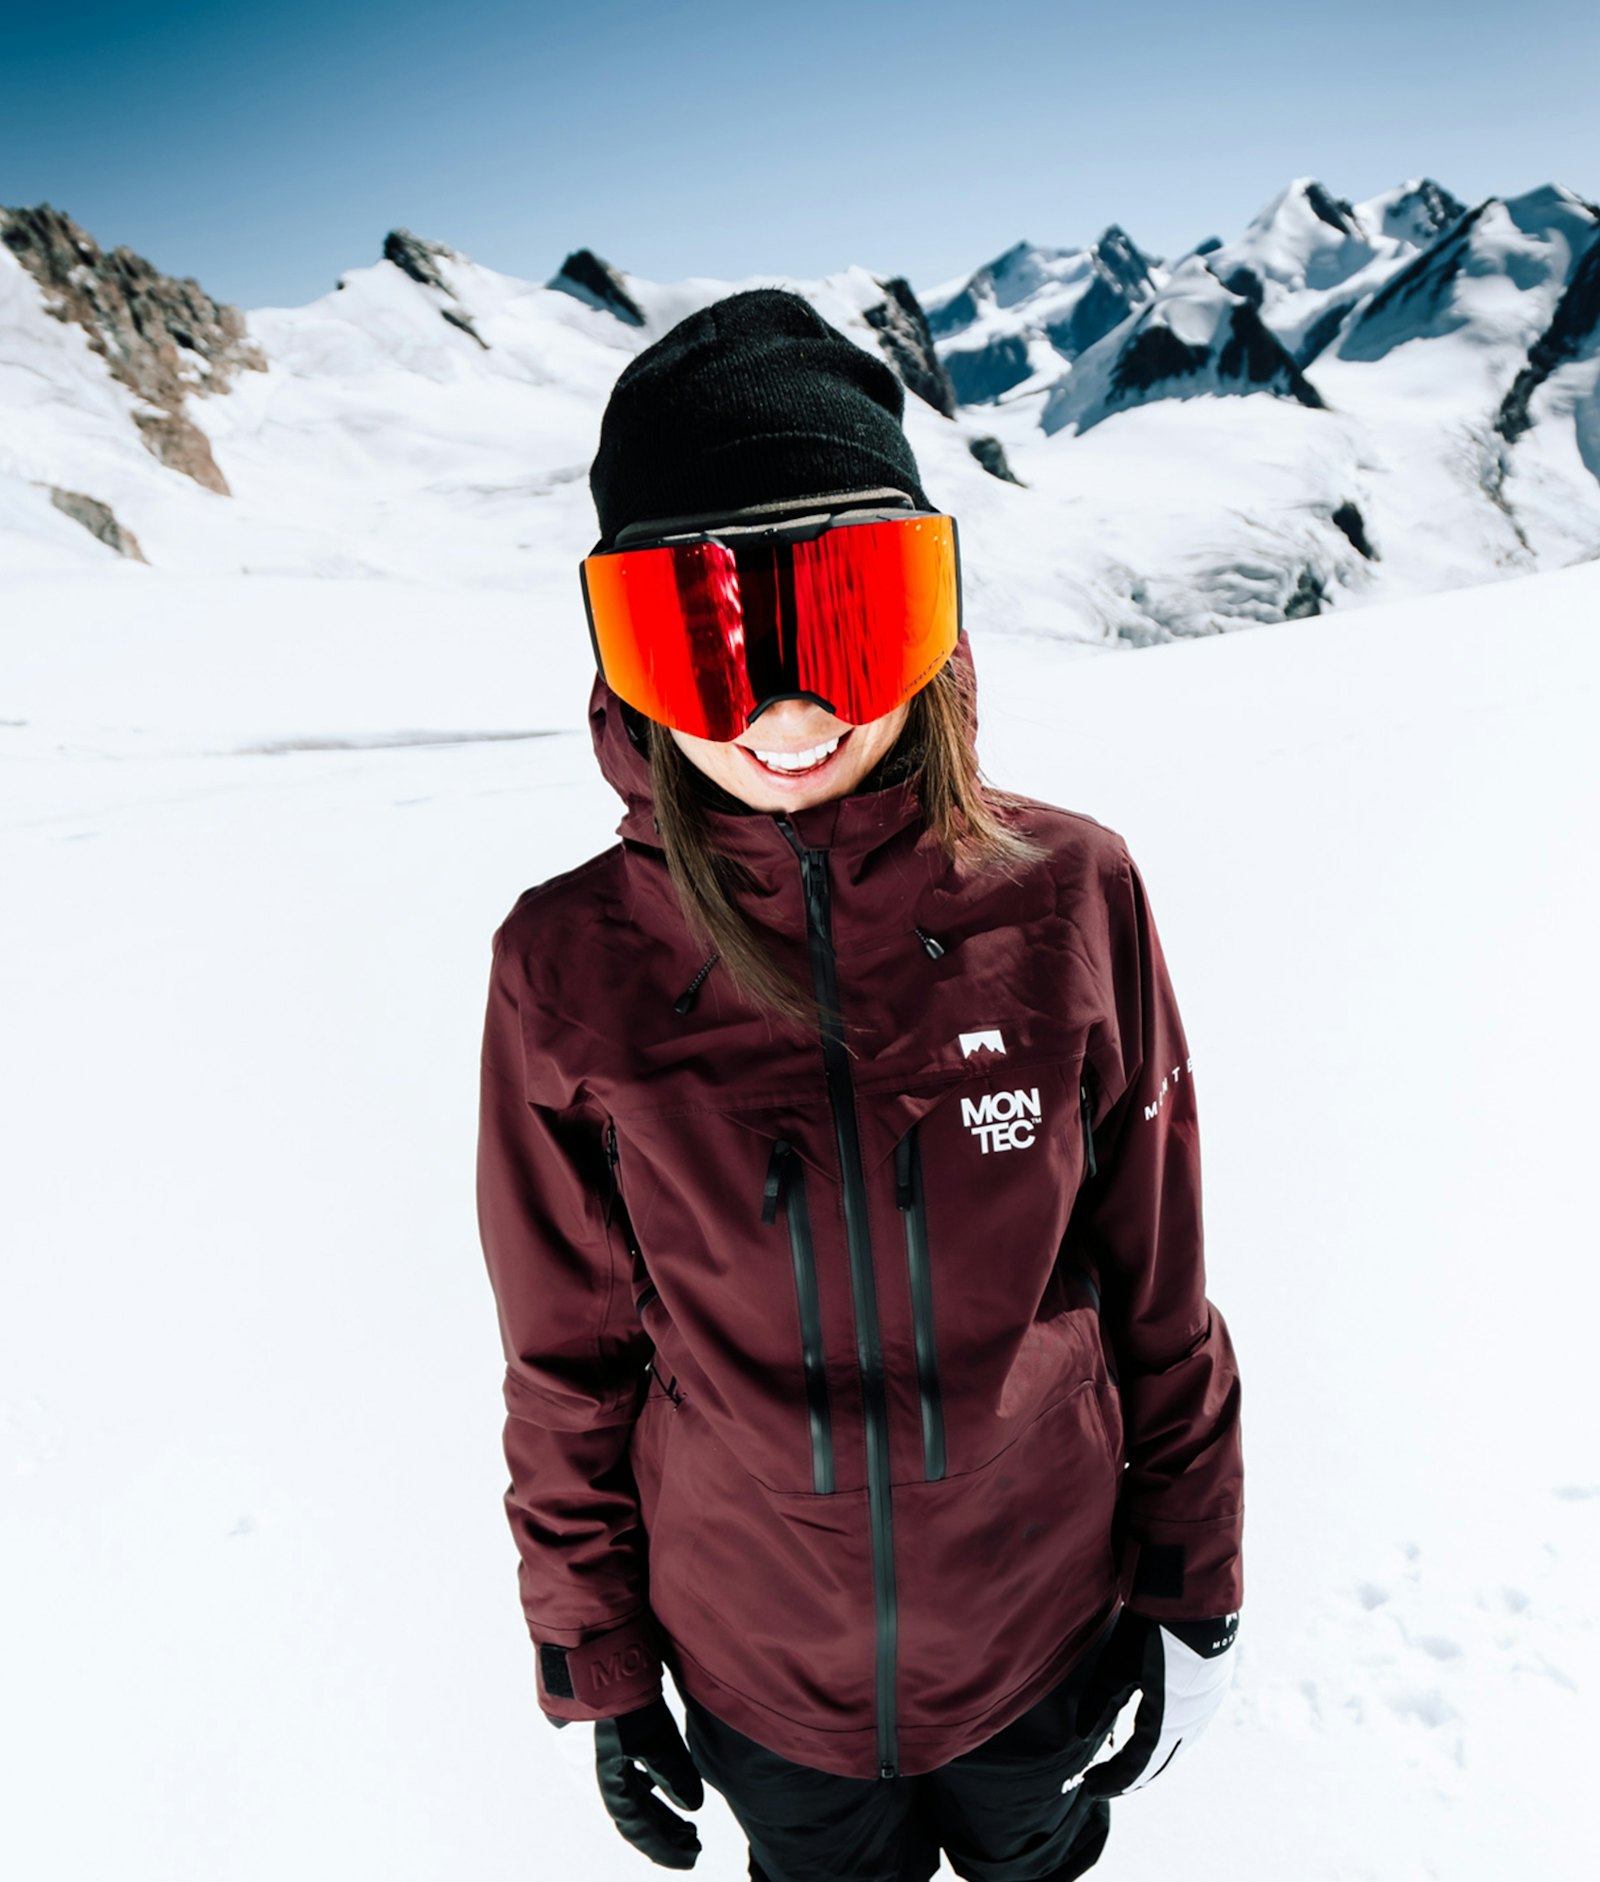 Moss W 2019 Veste Snowboard Femme Burgundy